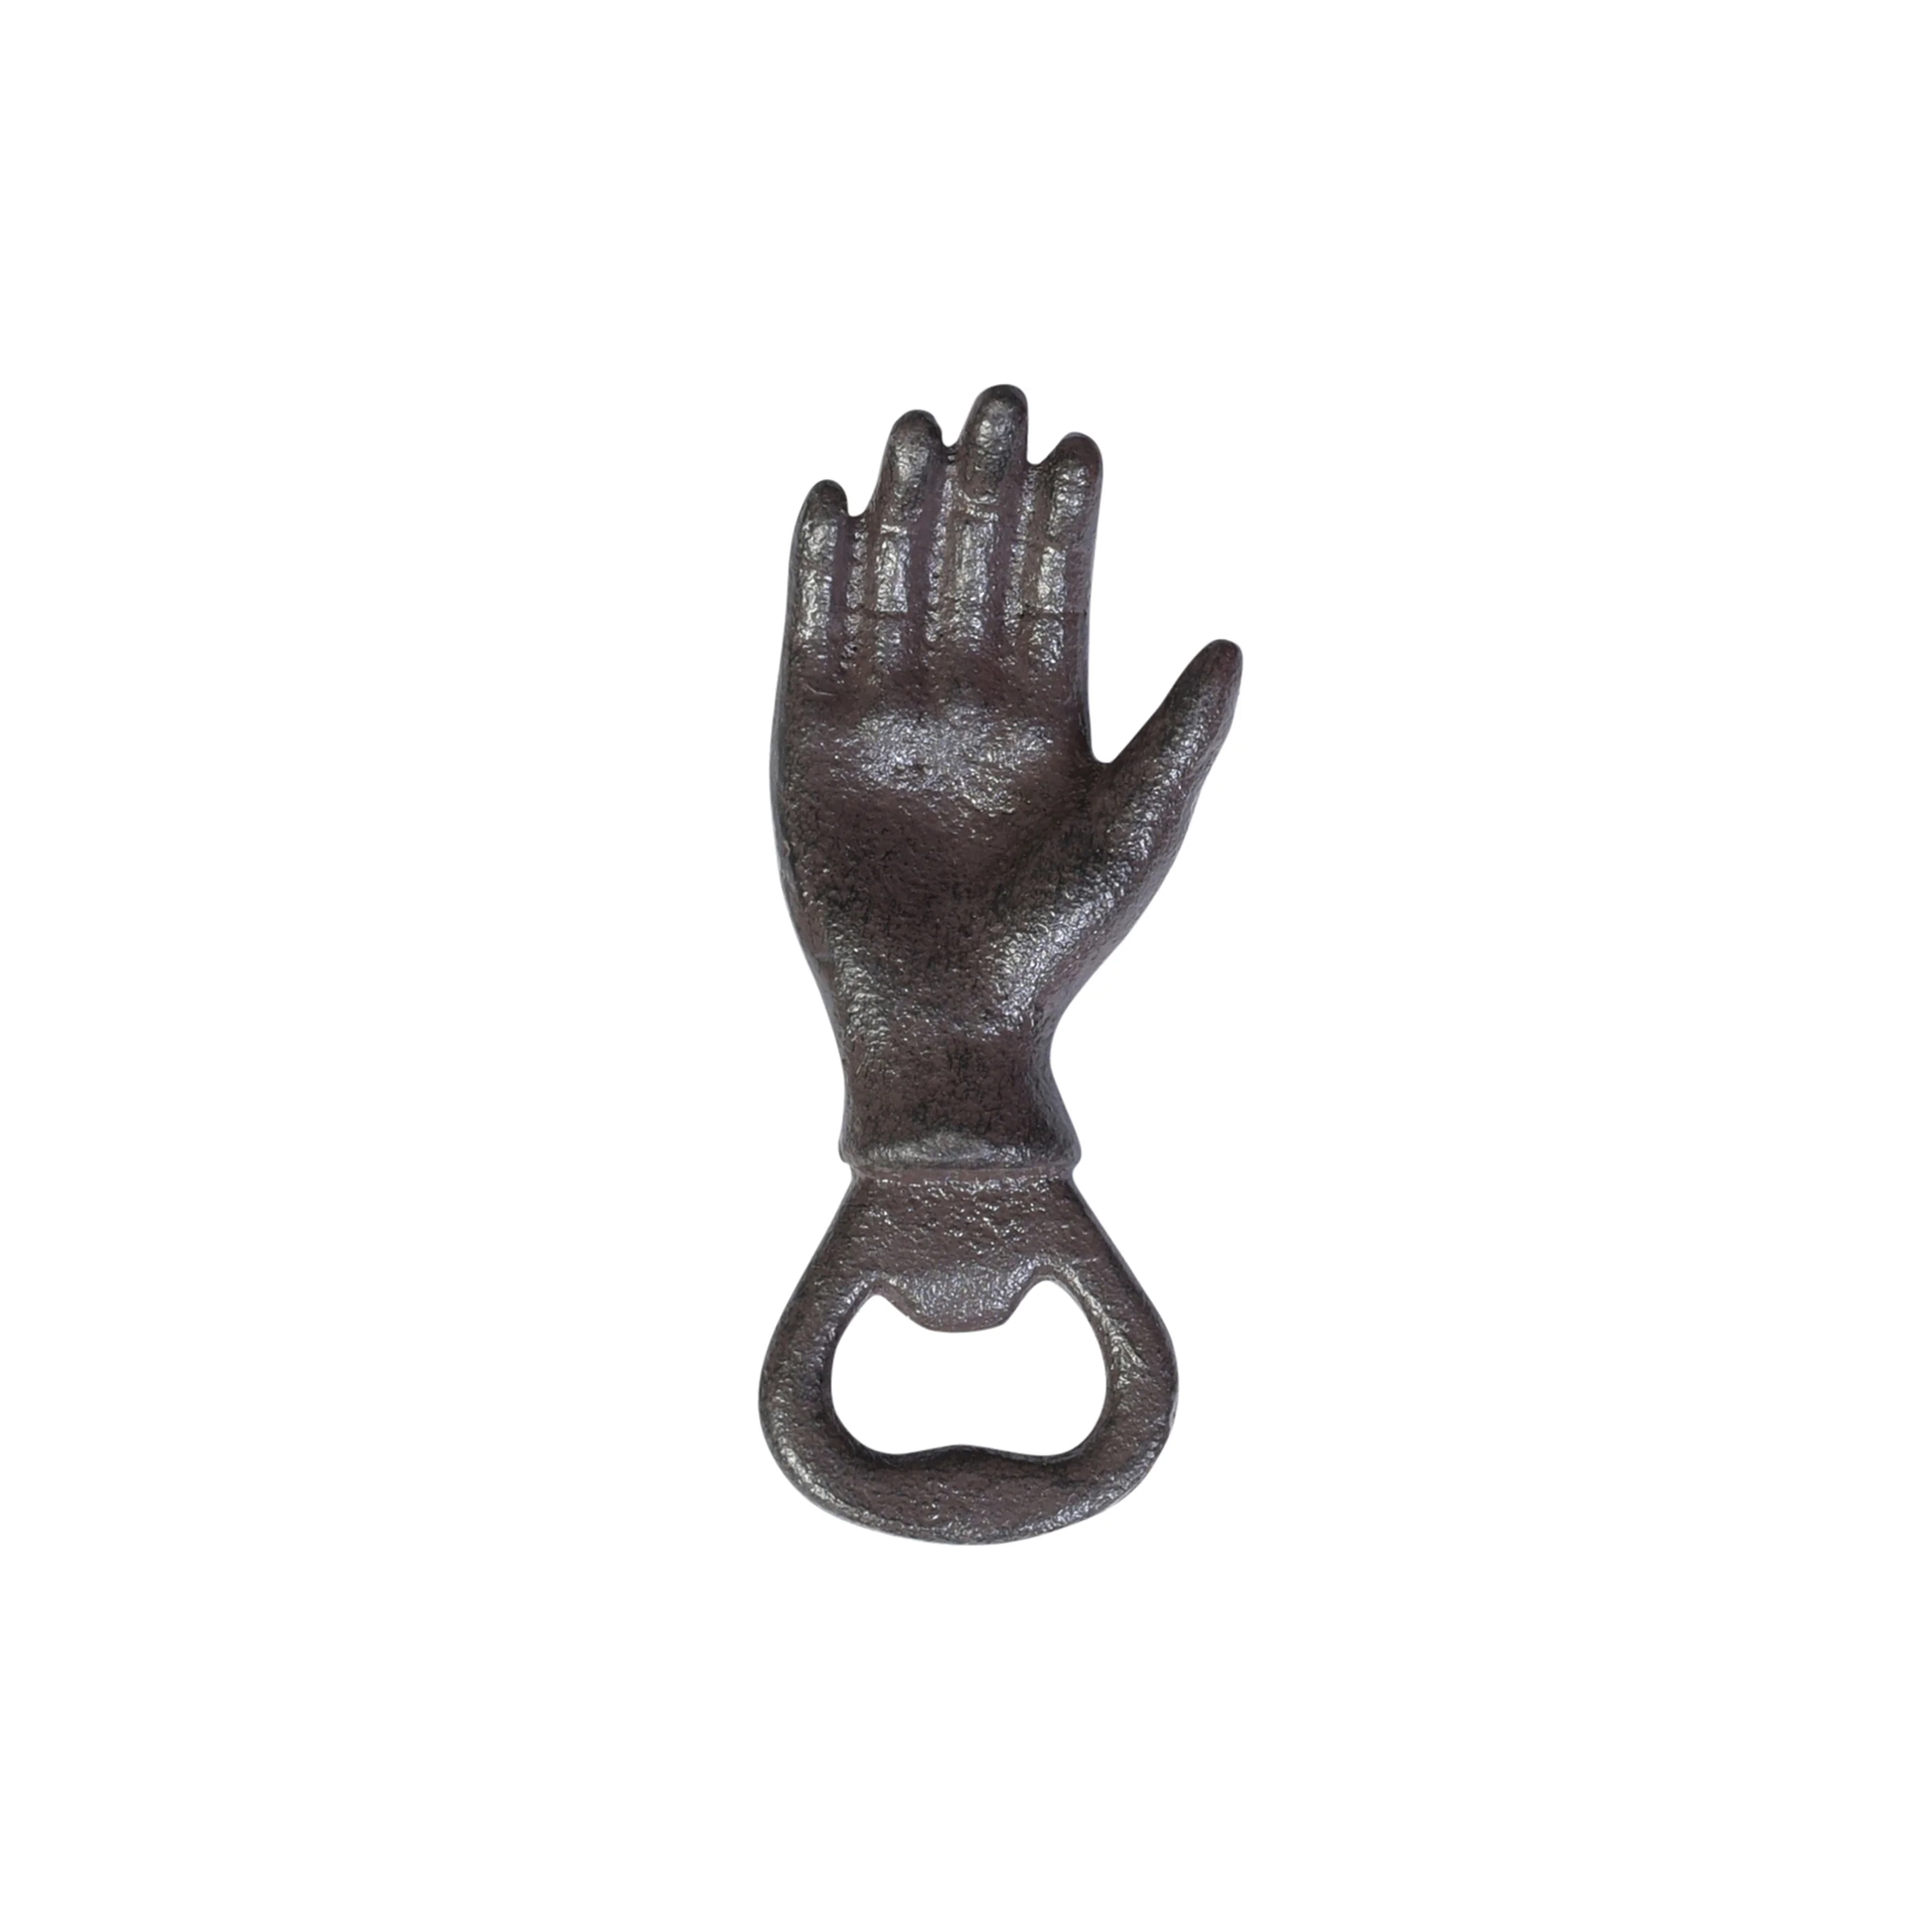 Hand-shaped cast iron bottle opener